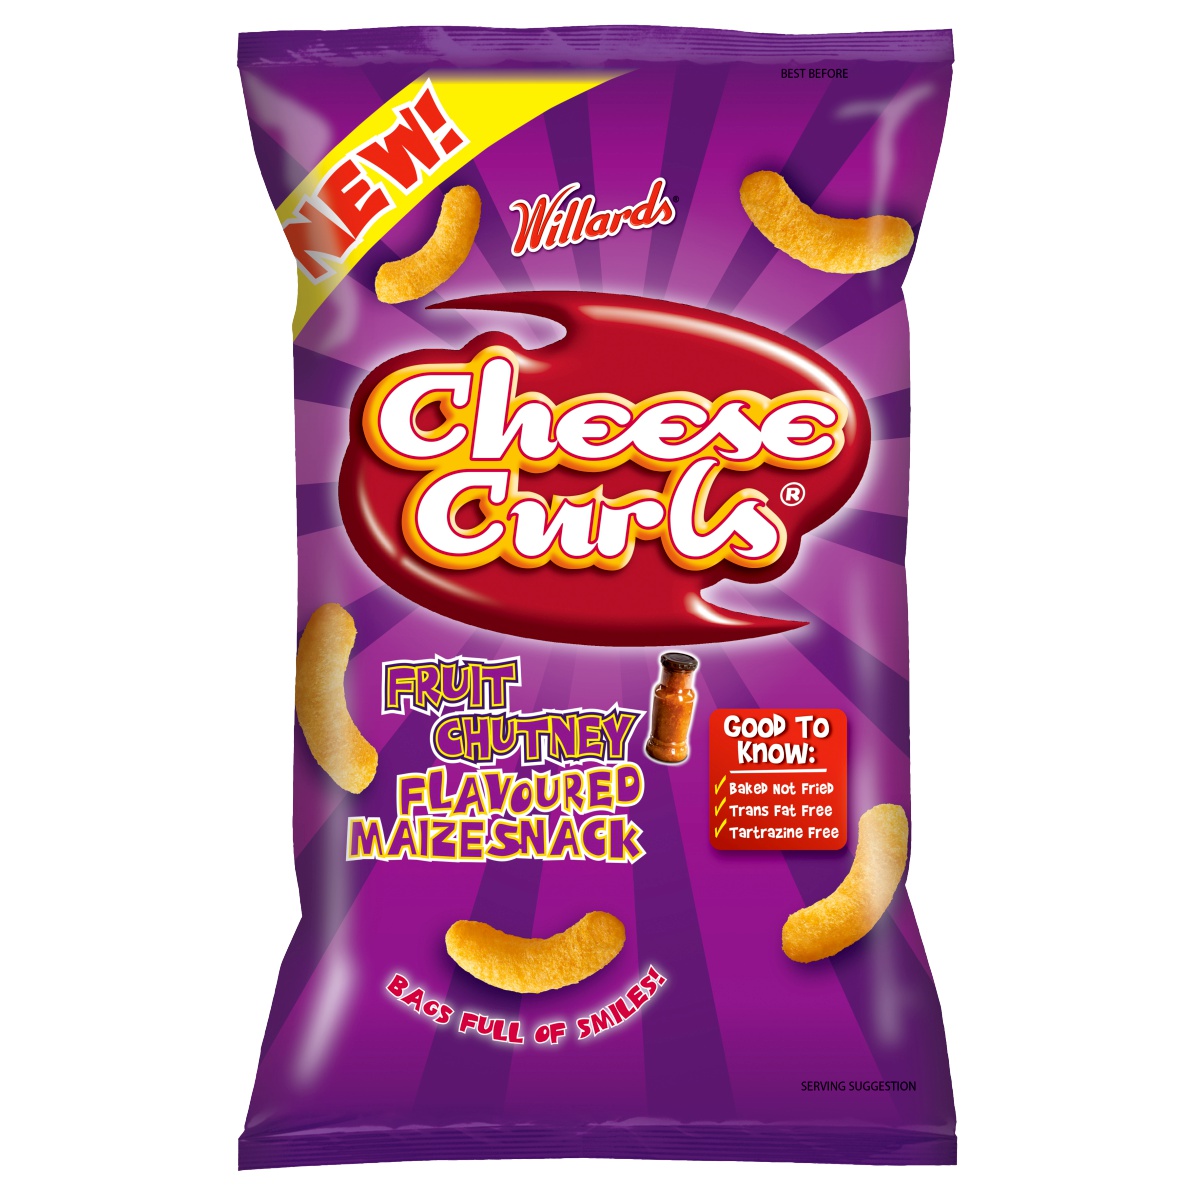 Cheese Curls Fruit Chutney